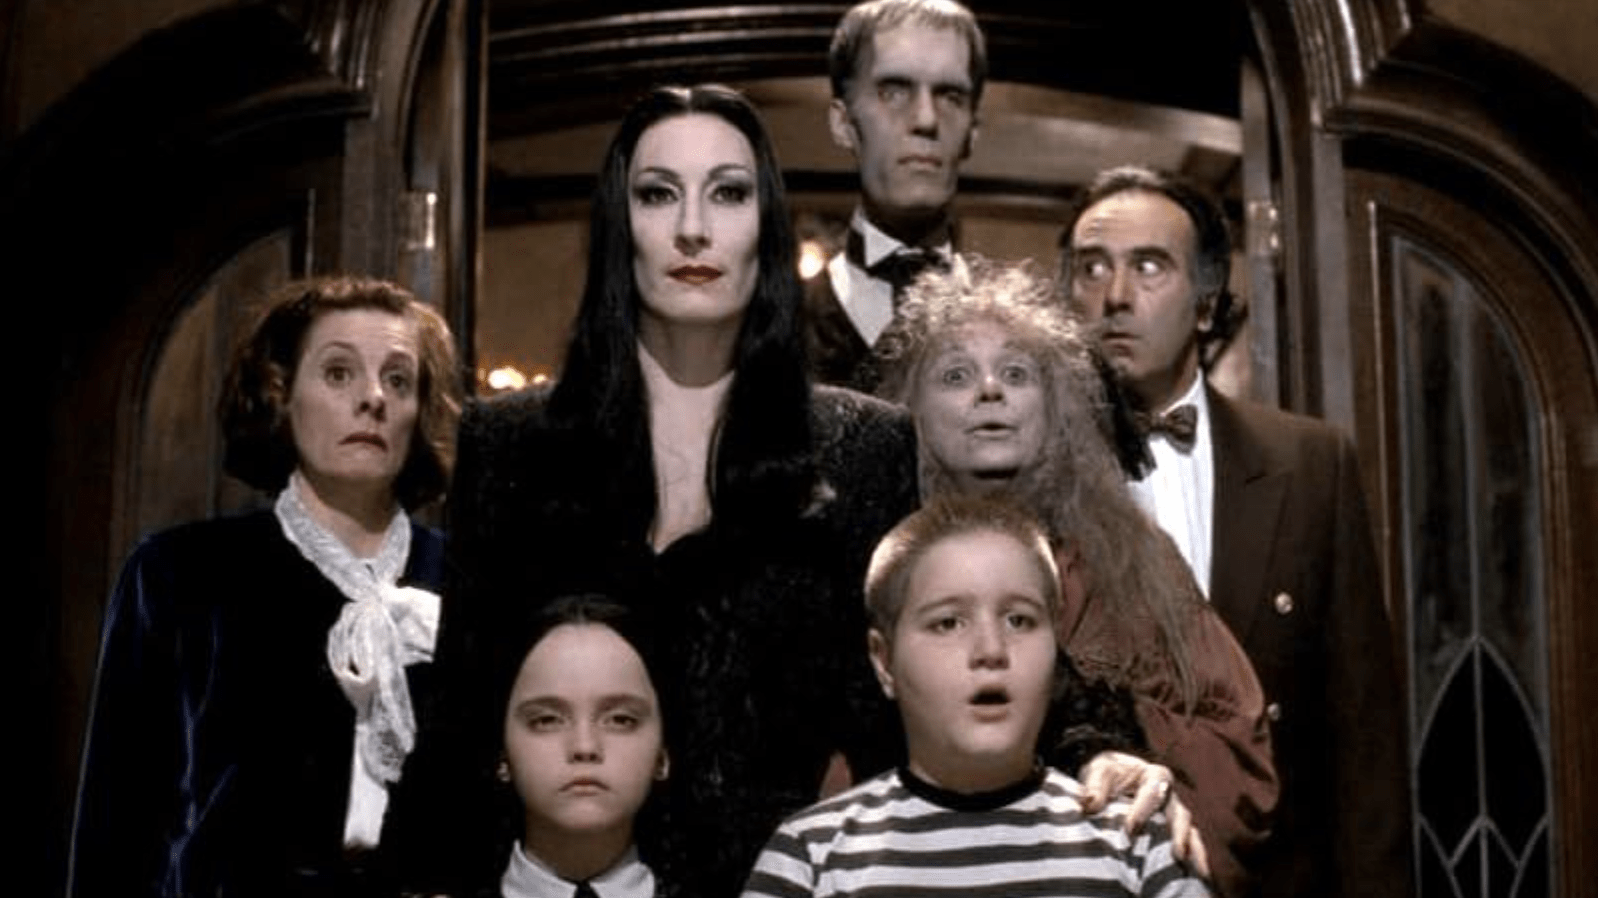 The Addams Family IMDB